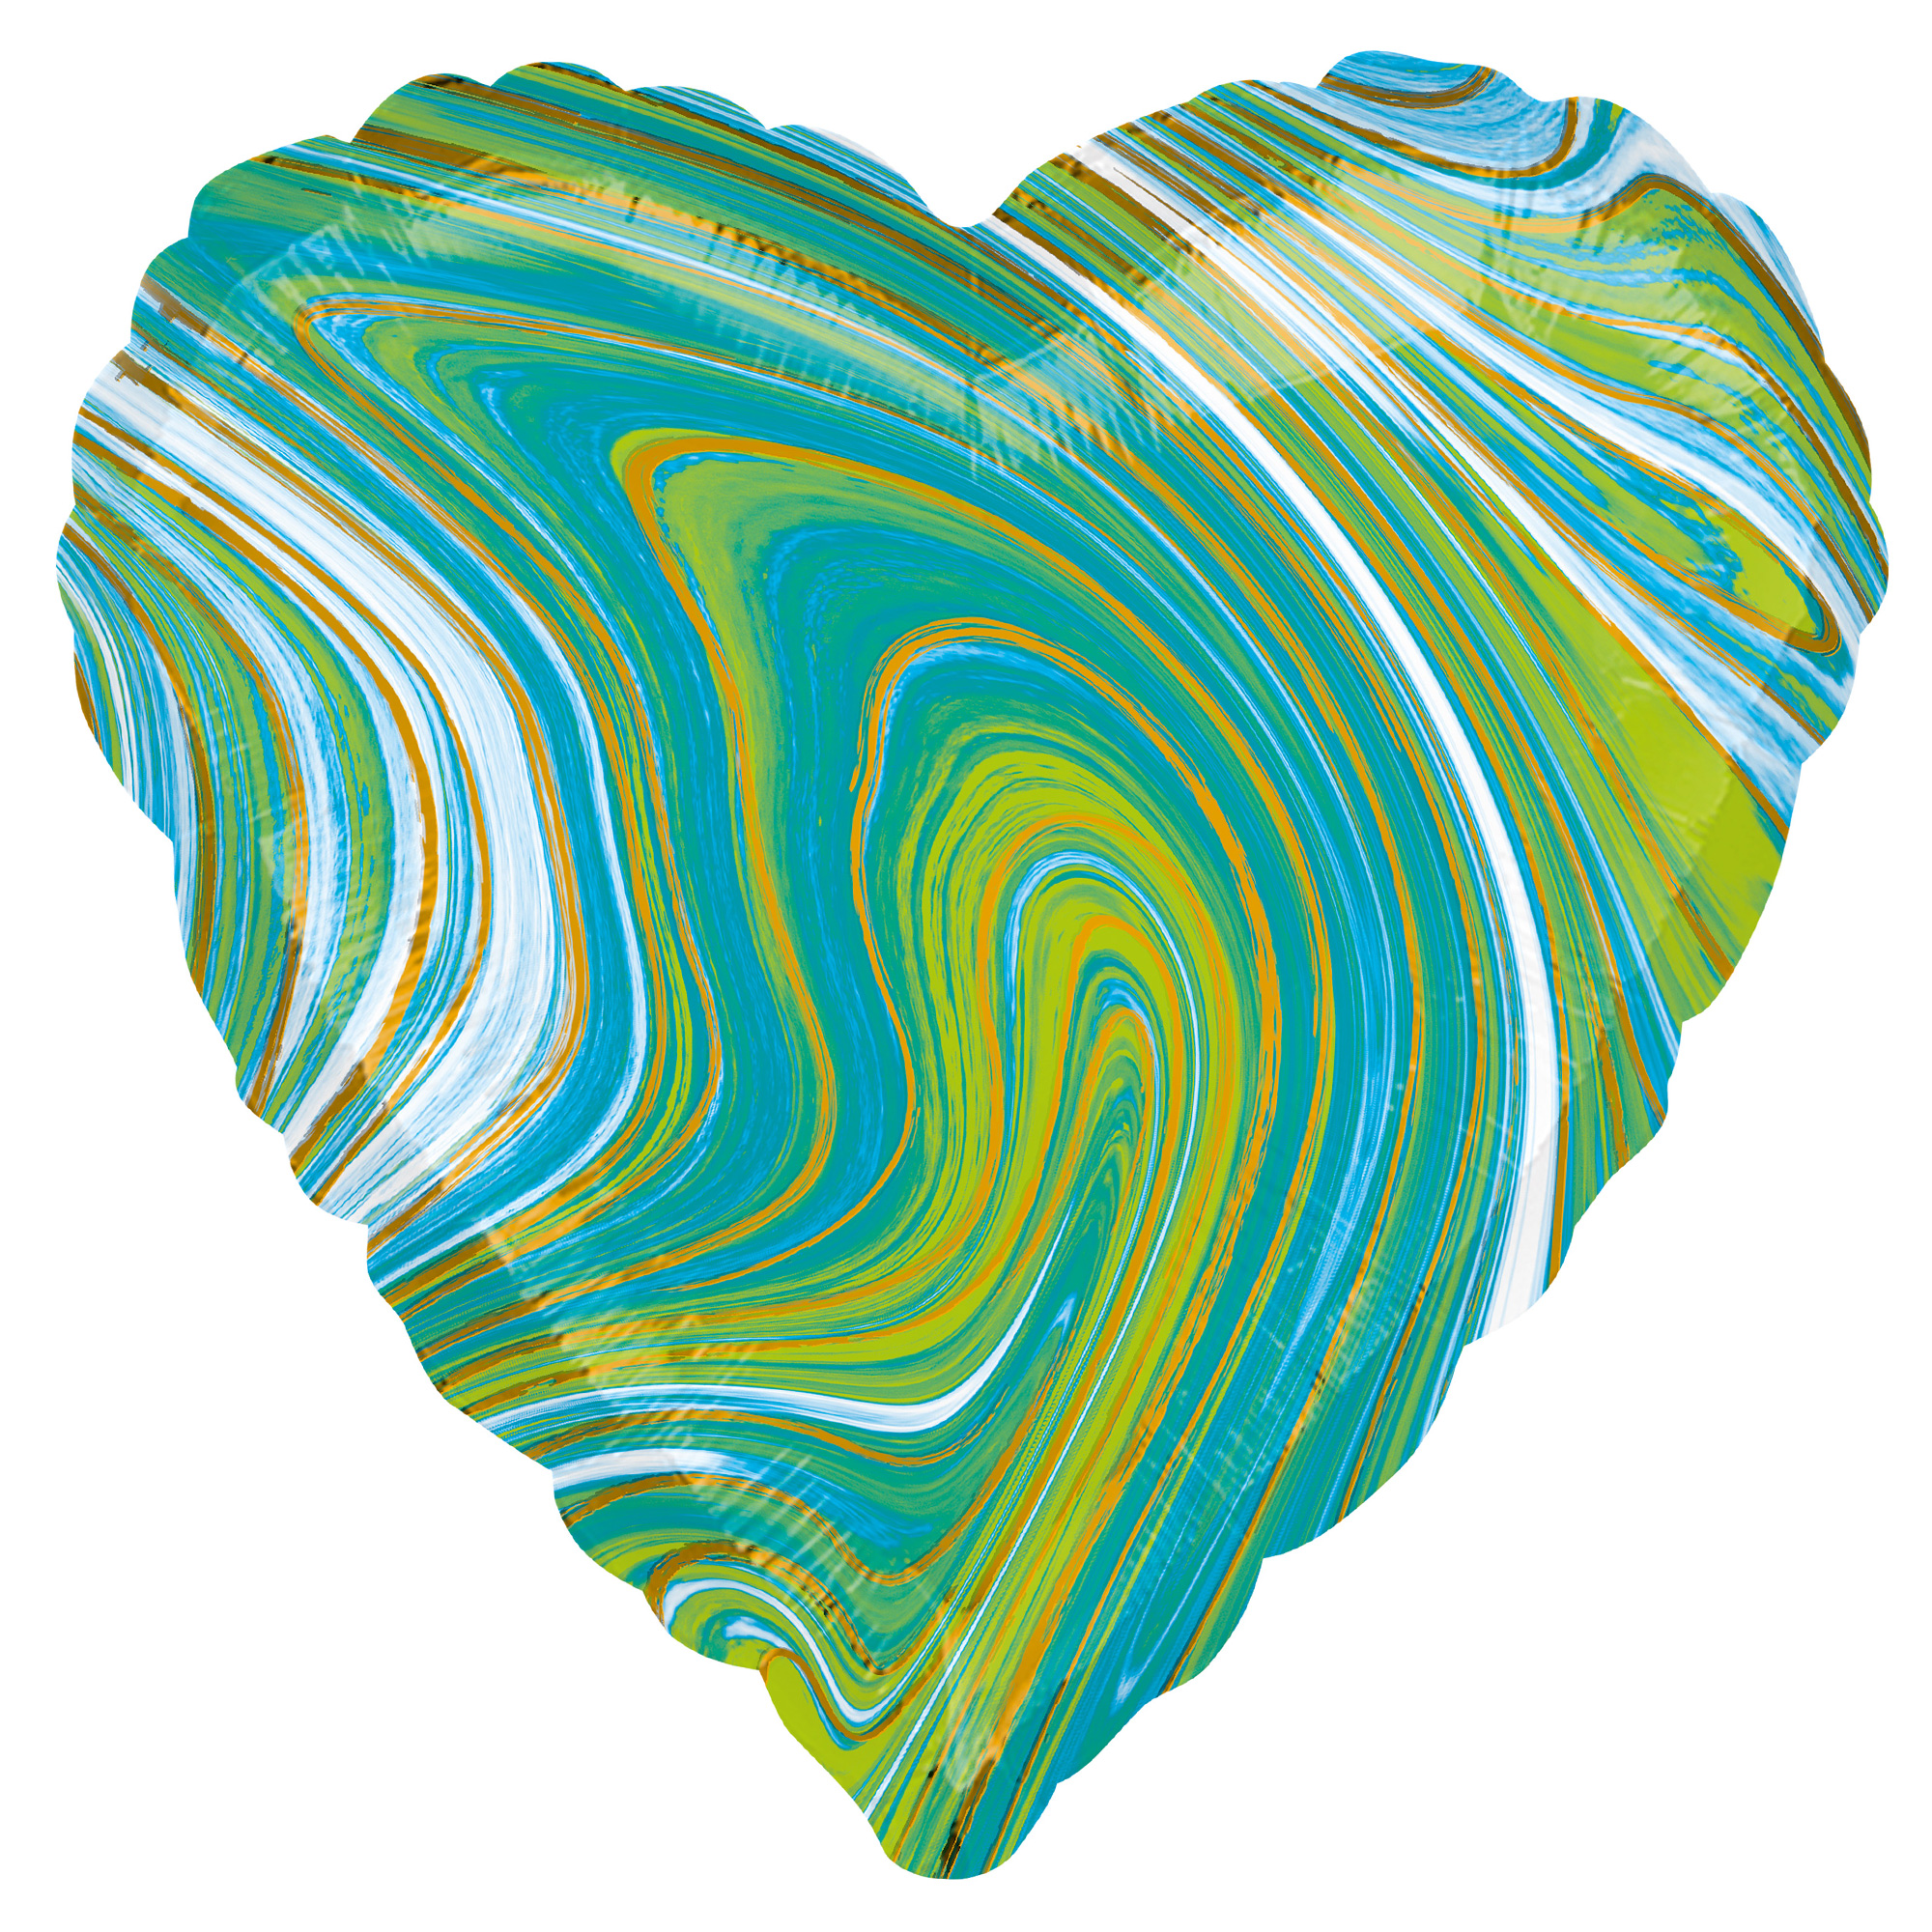 Blue & Green Heart Marble-Effect 17-Inch Foil Helium Balloon